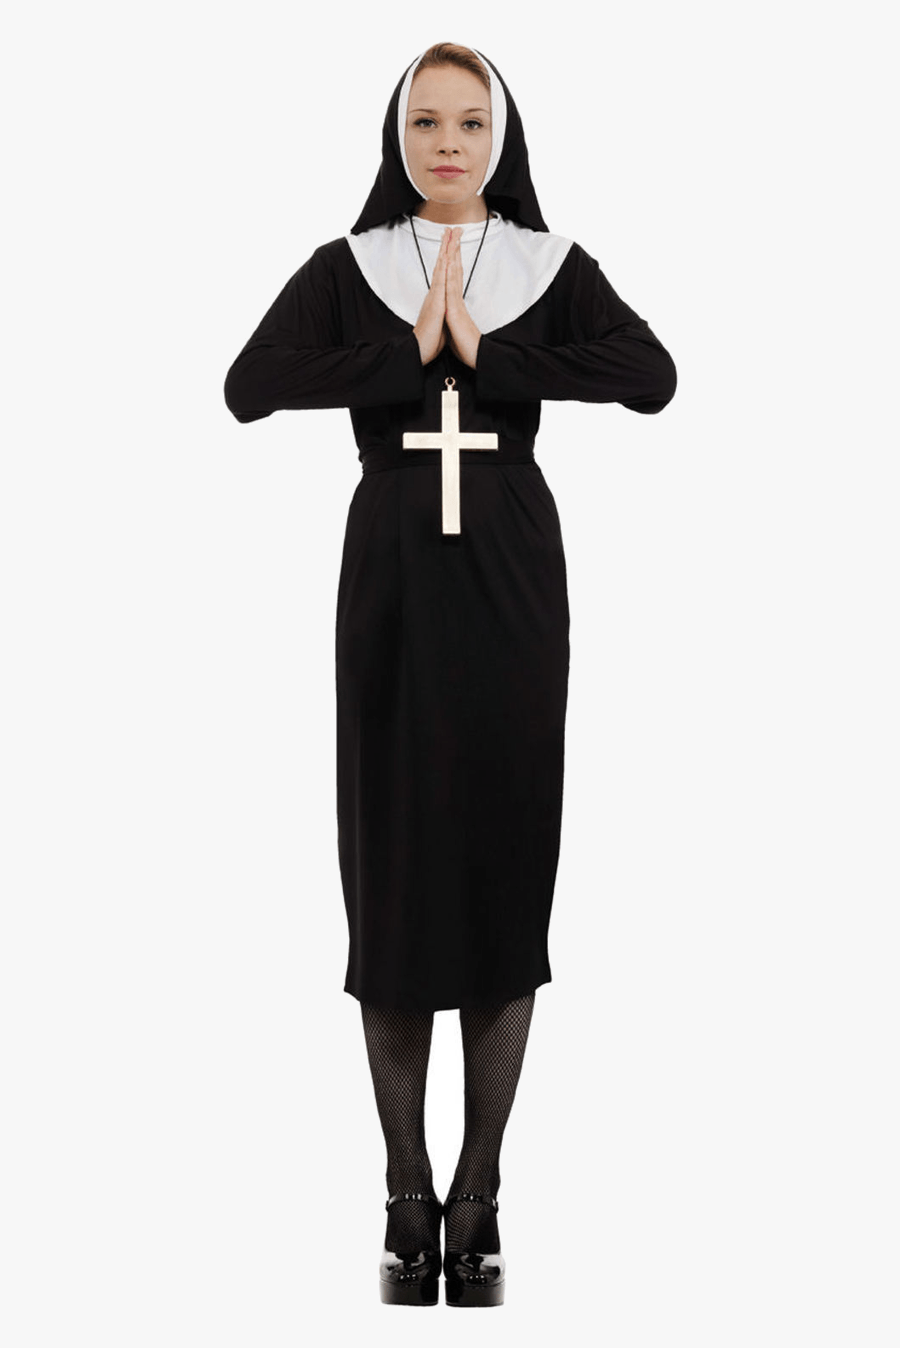 Nun Outfit Png, Transparent Clipart